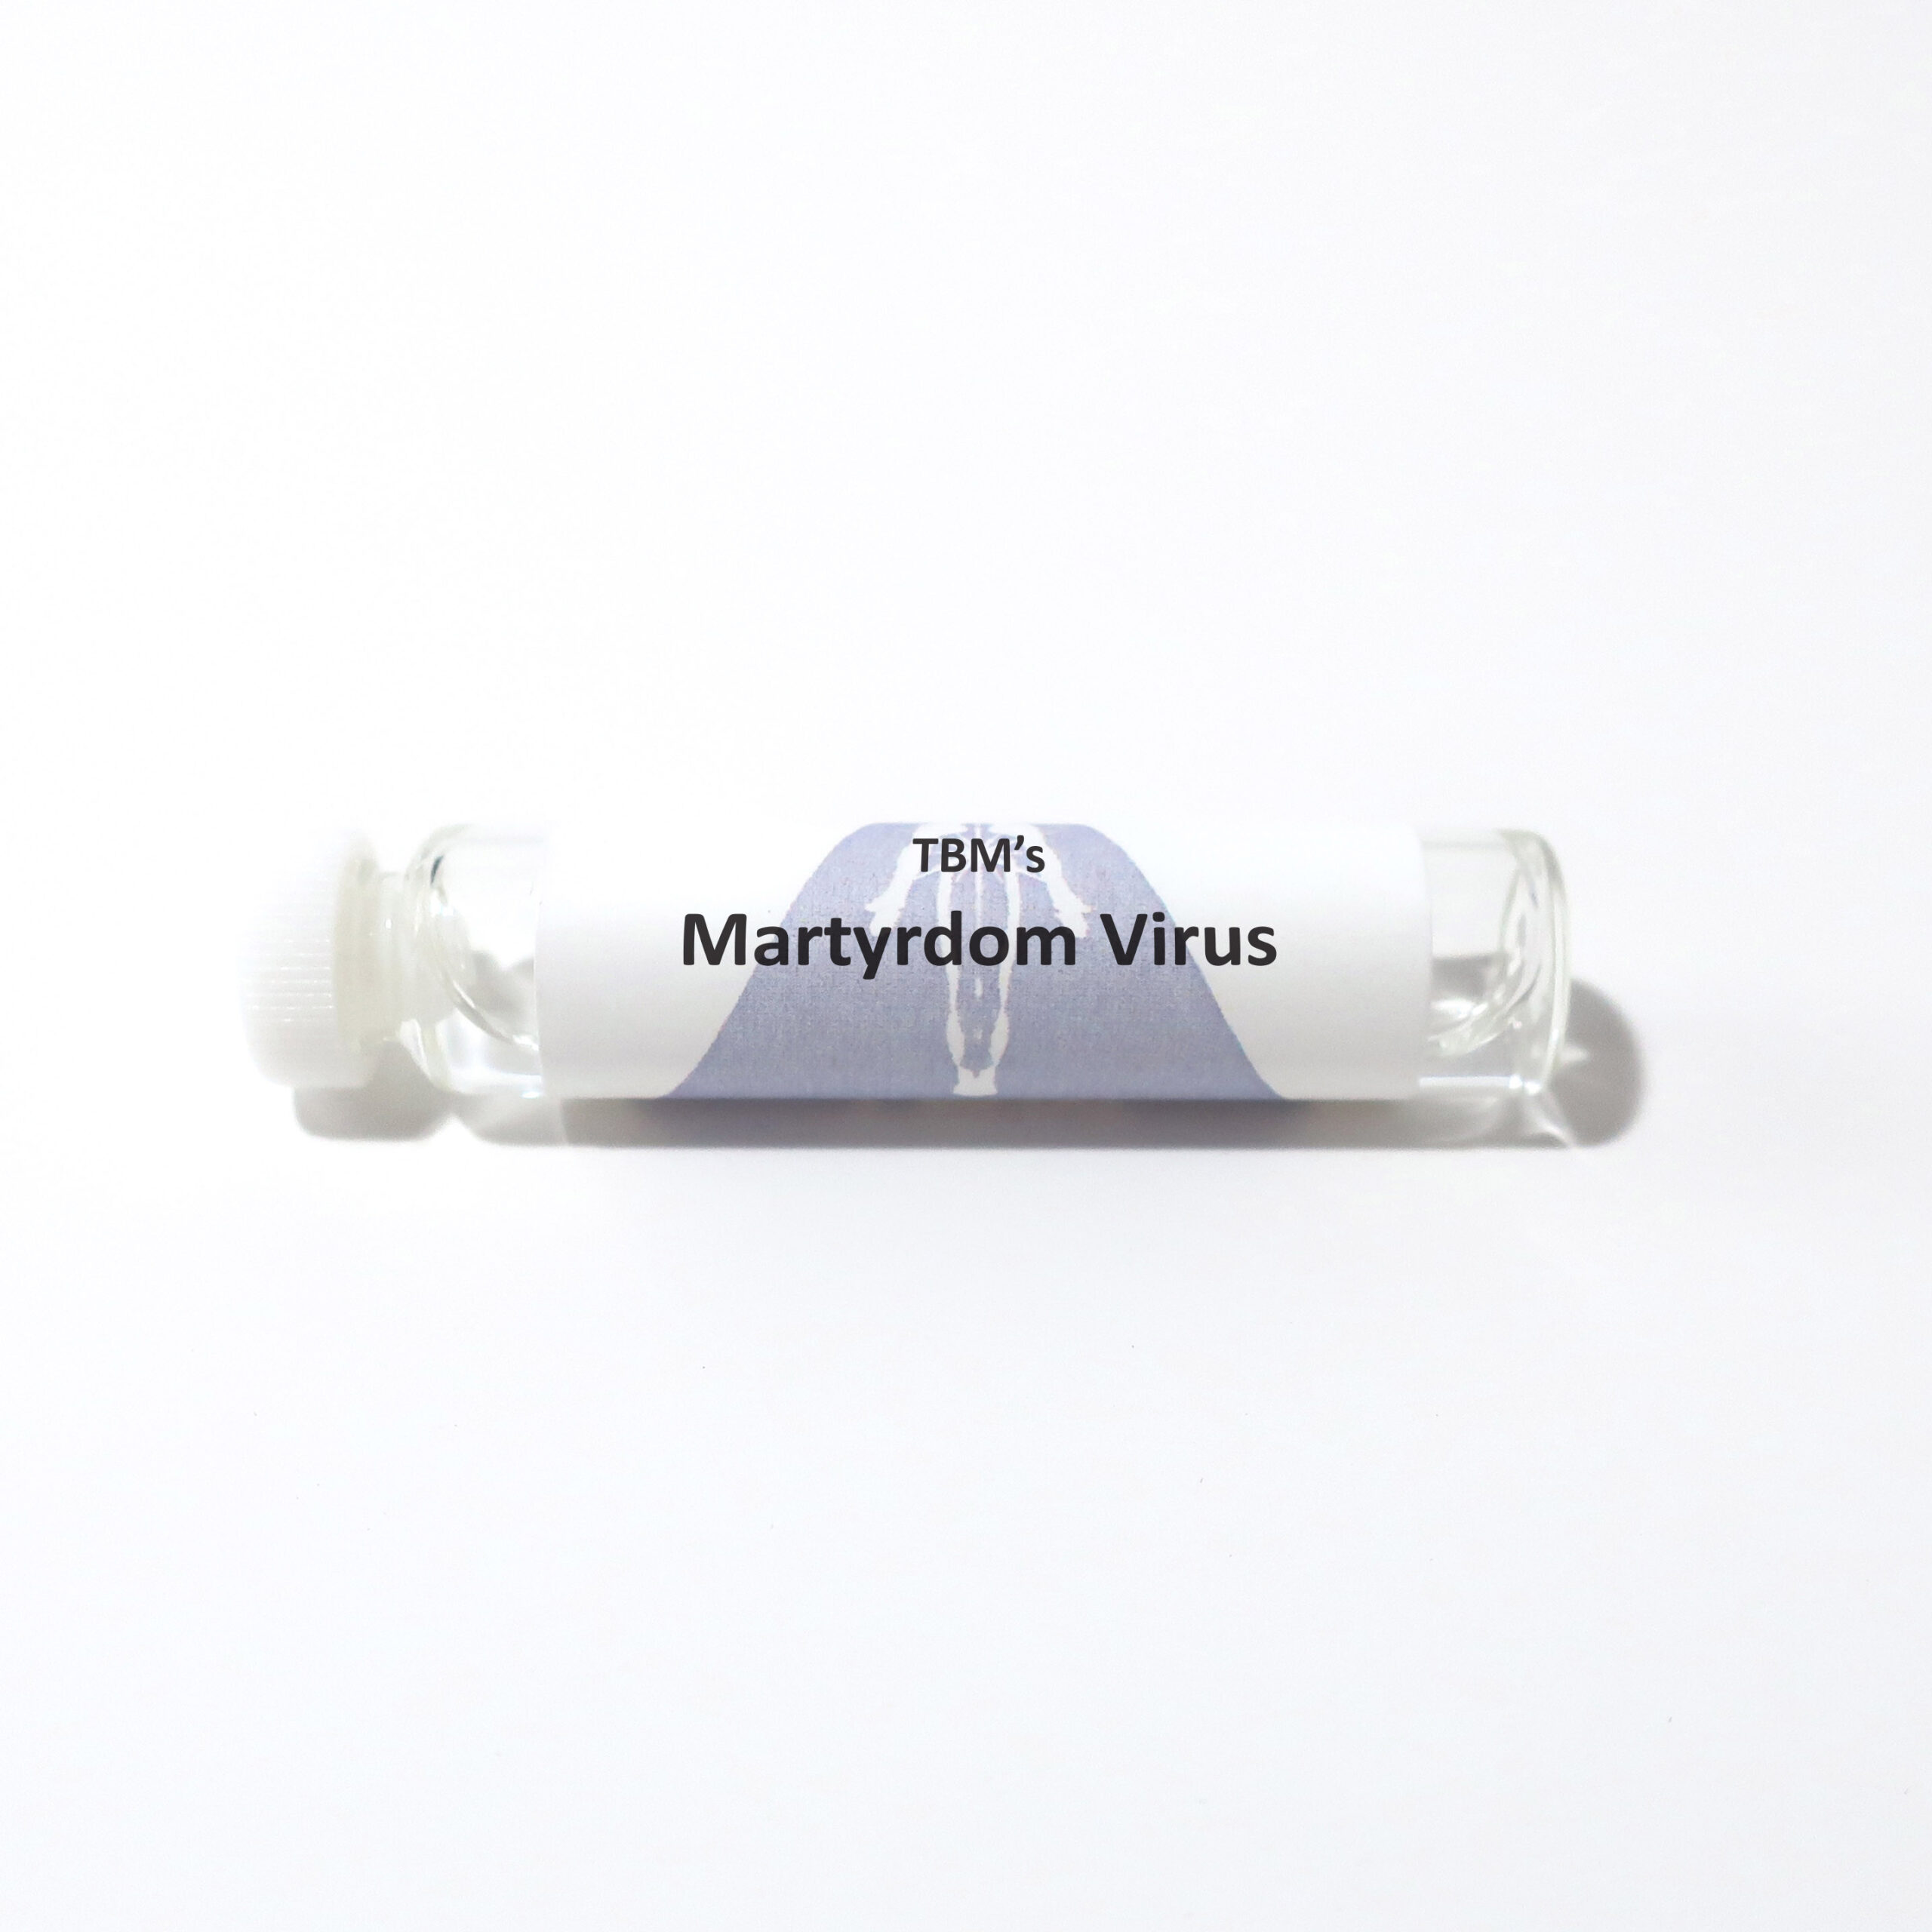 Martyrdom Virus